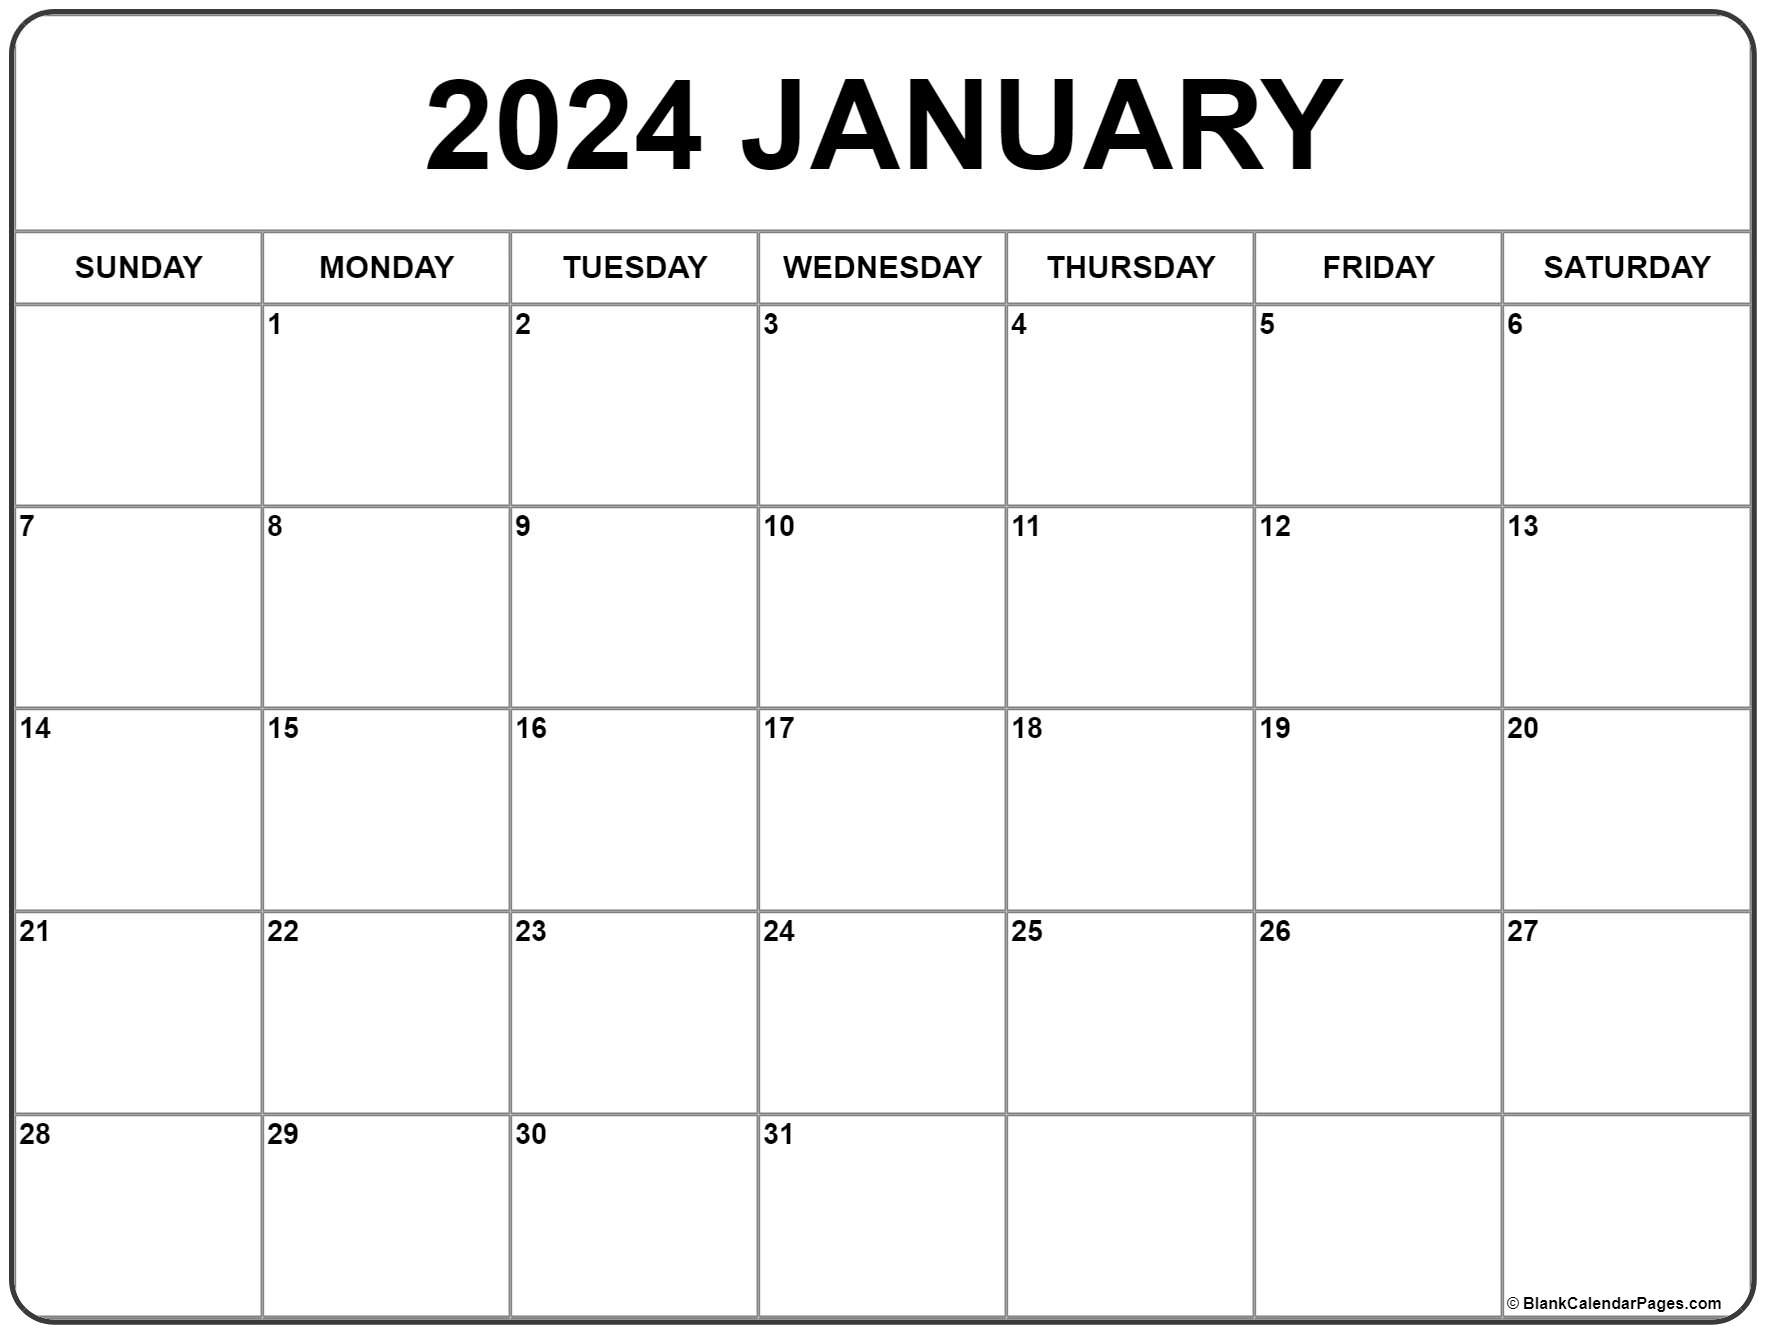 January 2024 Calendar | Free Printable Calendar for Printable Calendar 2024 January